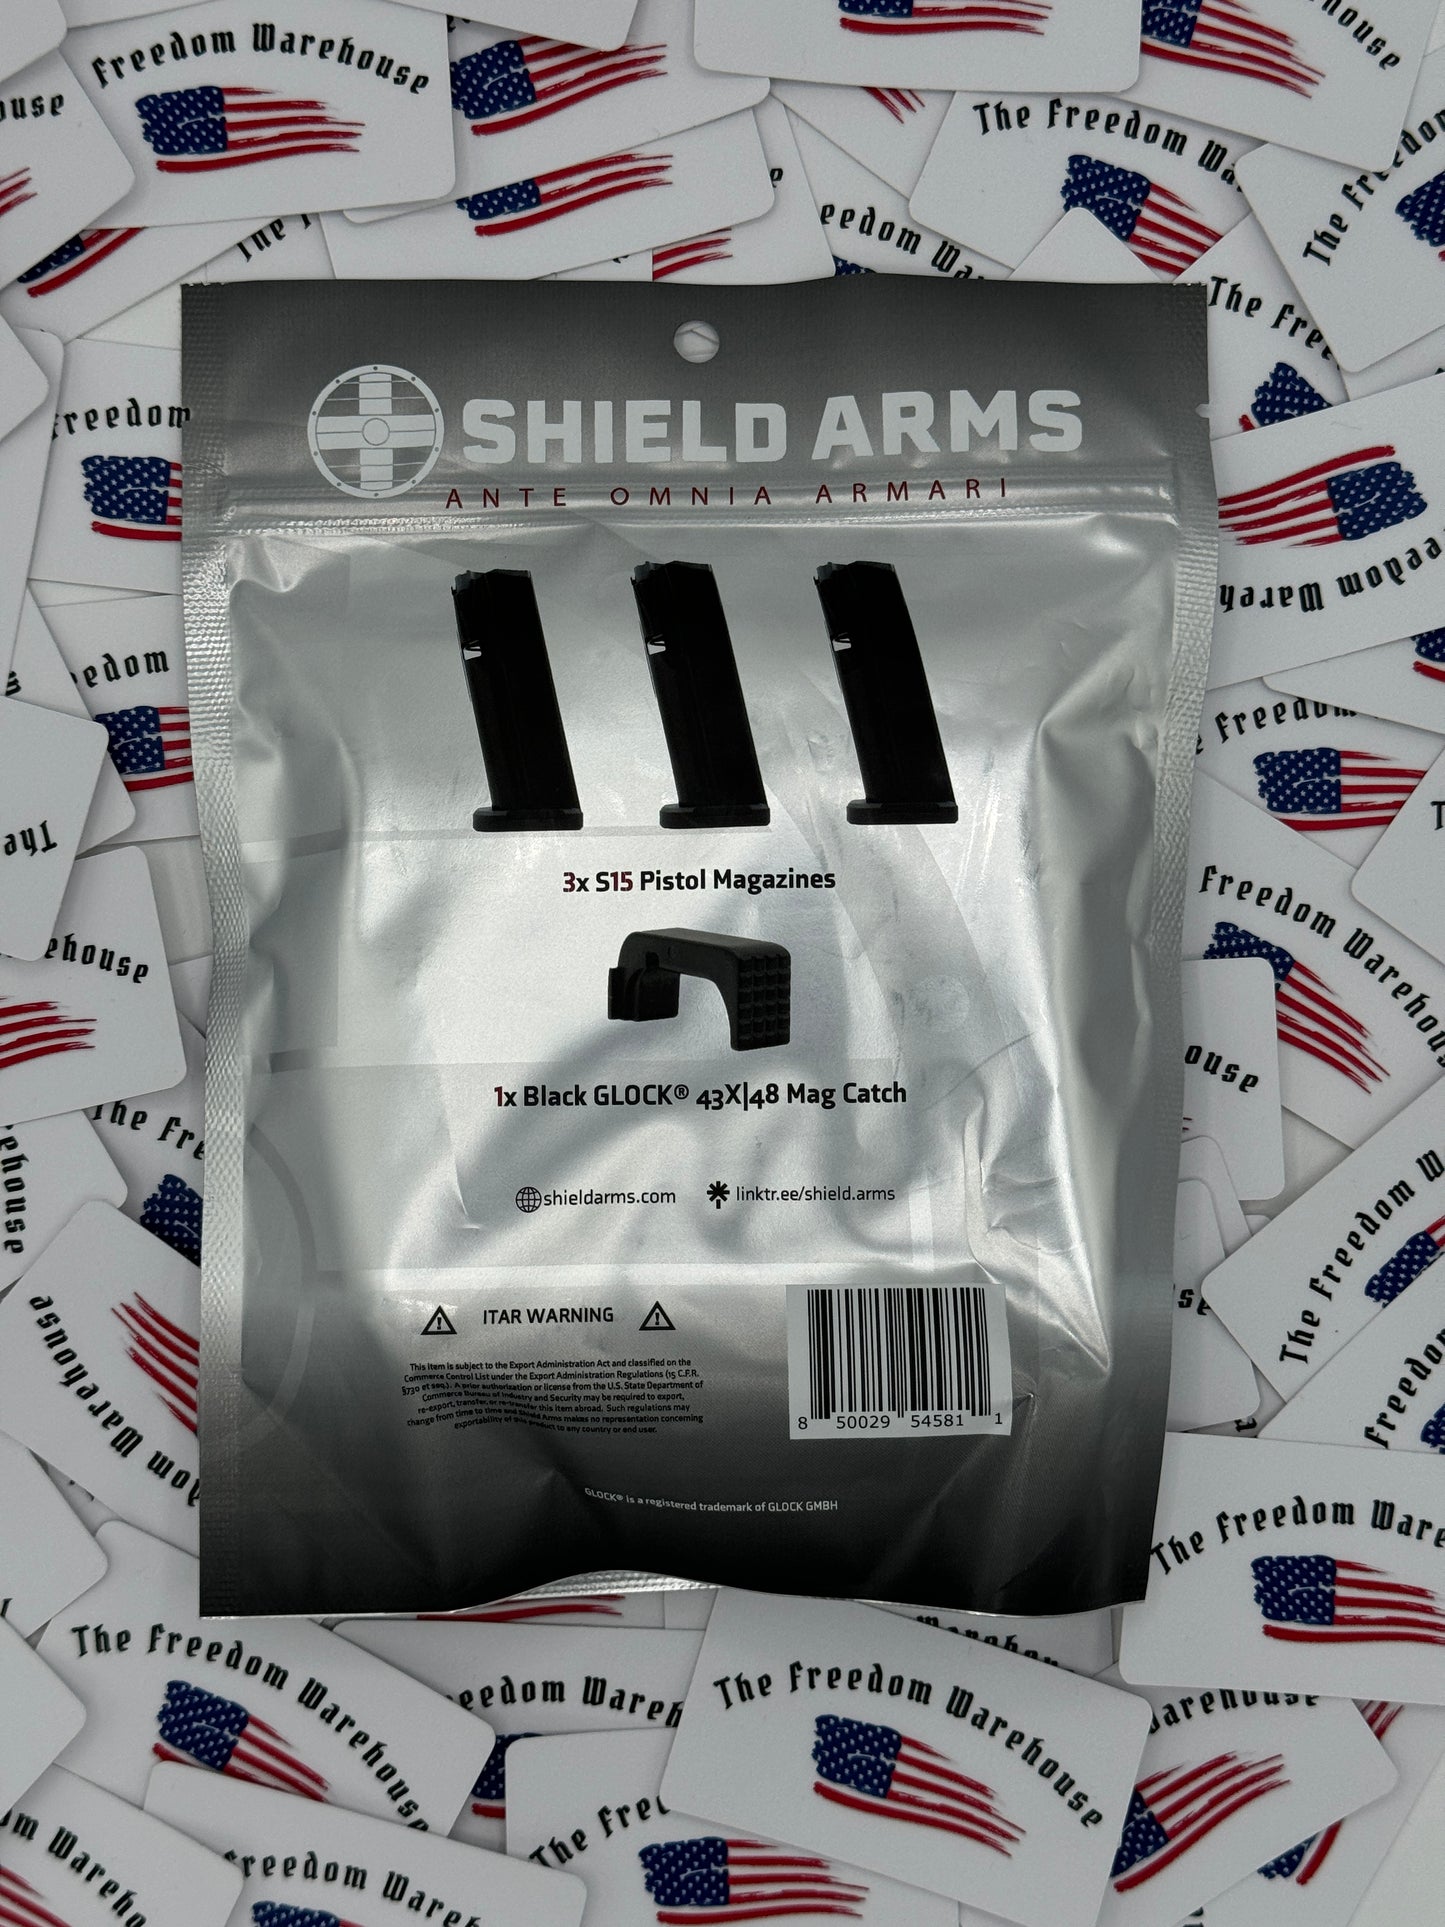 Shield Arms S15 Gen 3 Starter Kit for Glock 43X/48 3-Pack